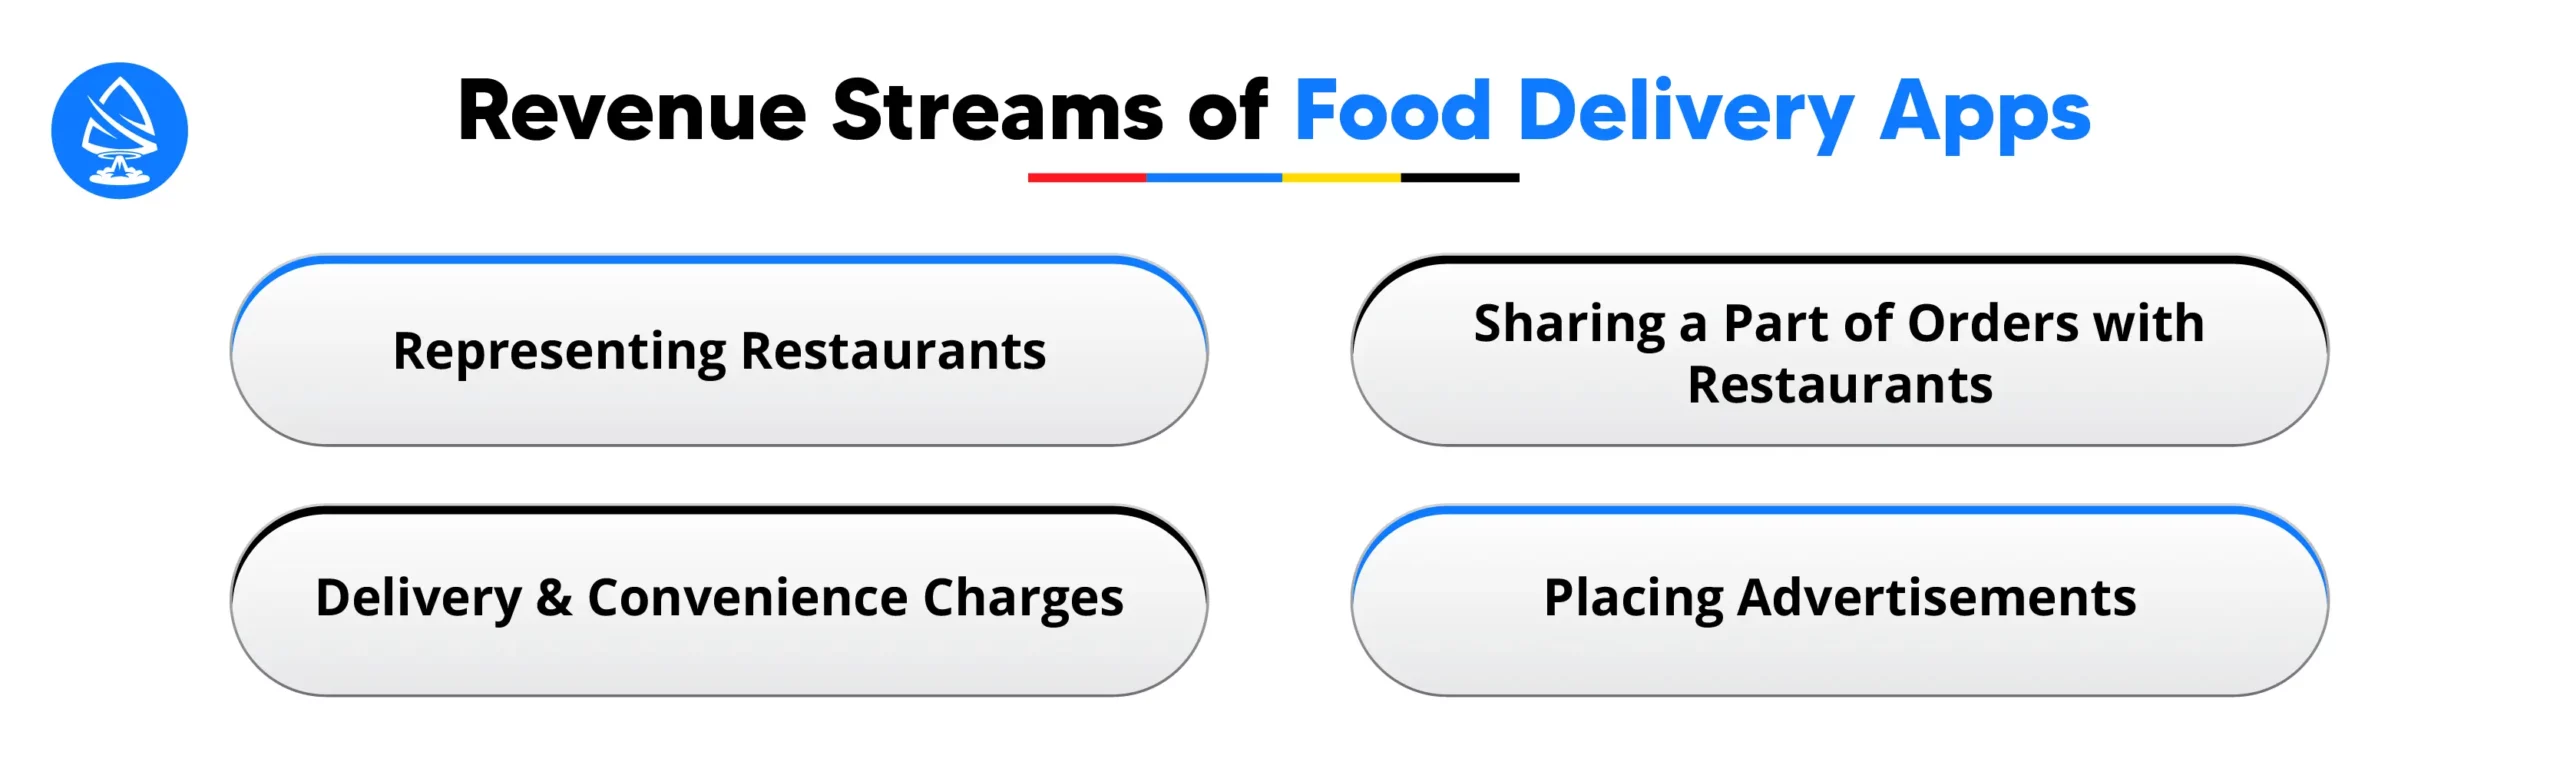 Revenue Streams of Food Delivery Apps